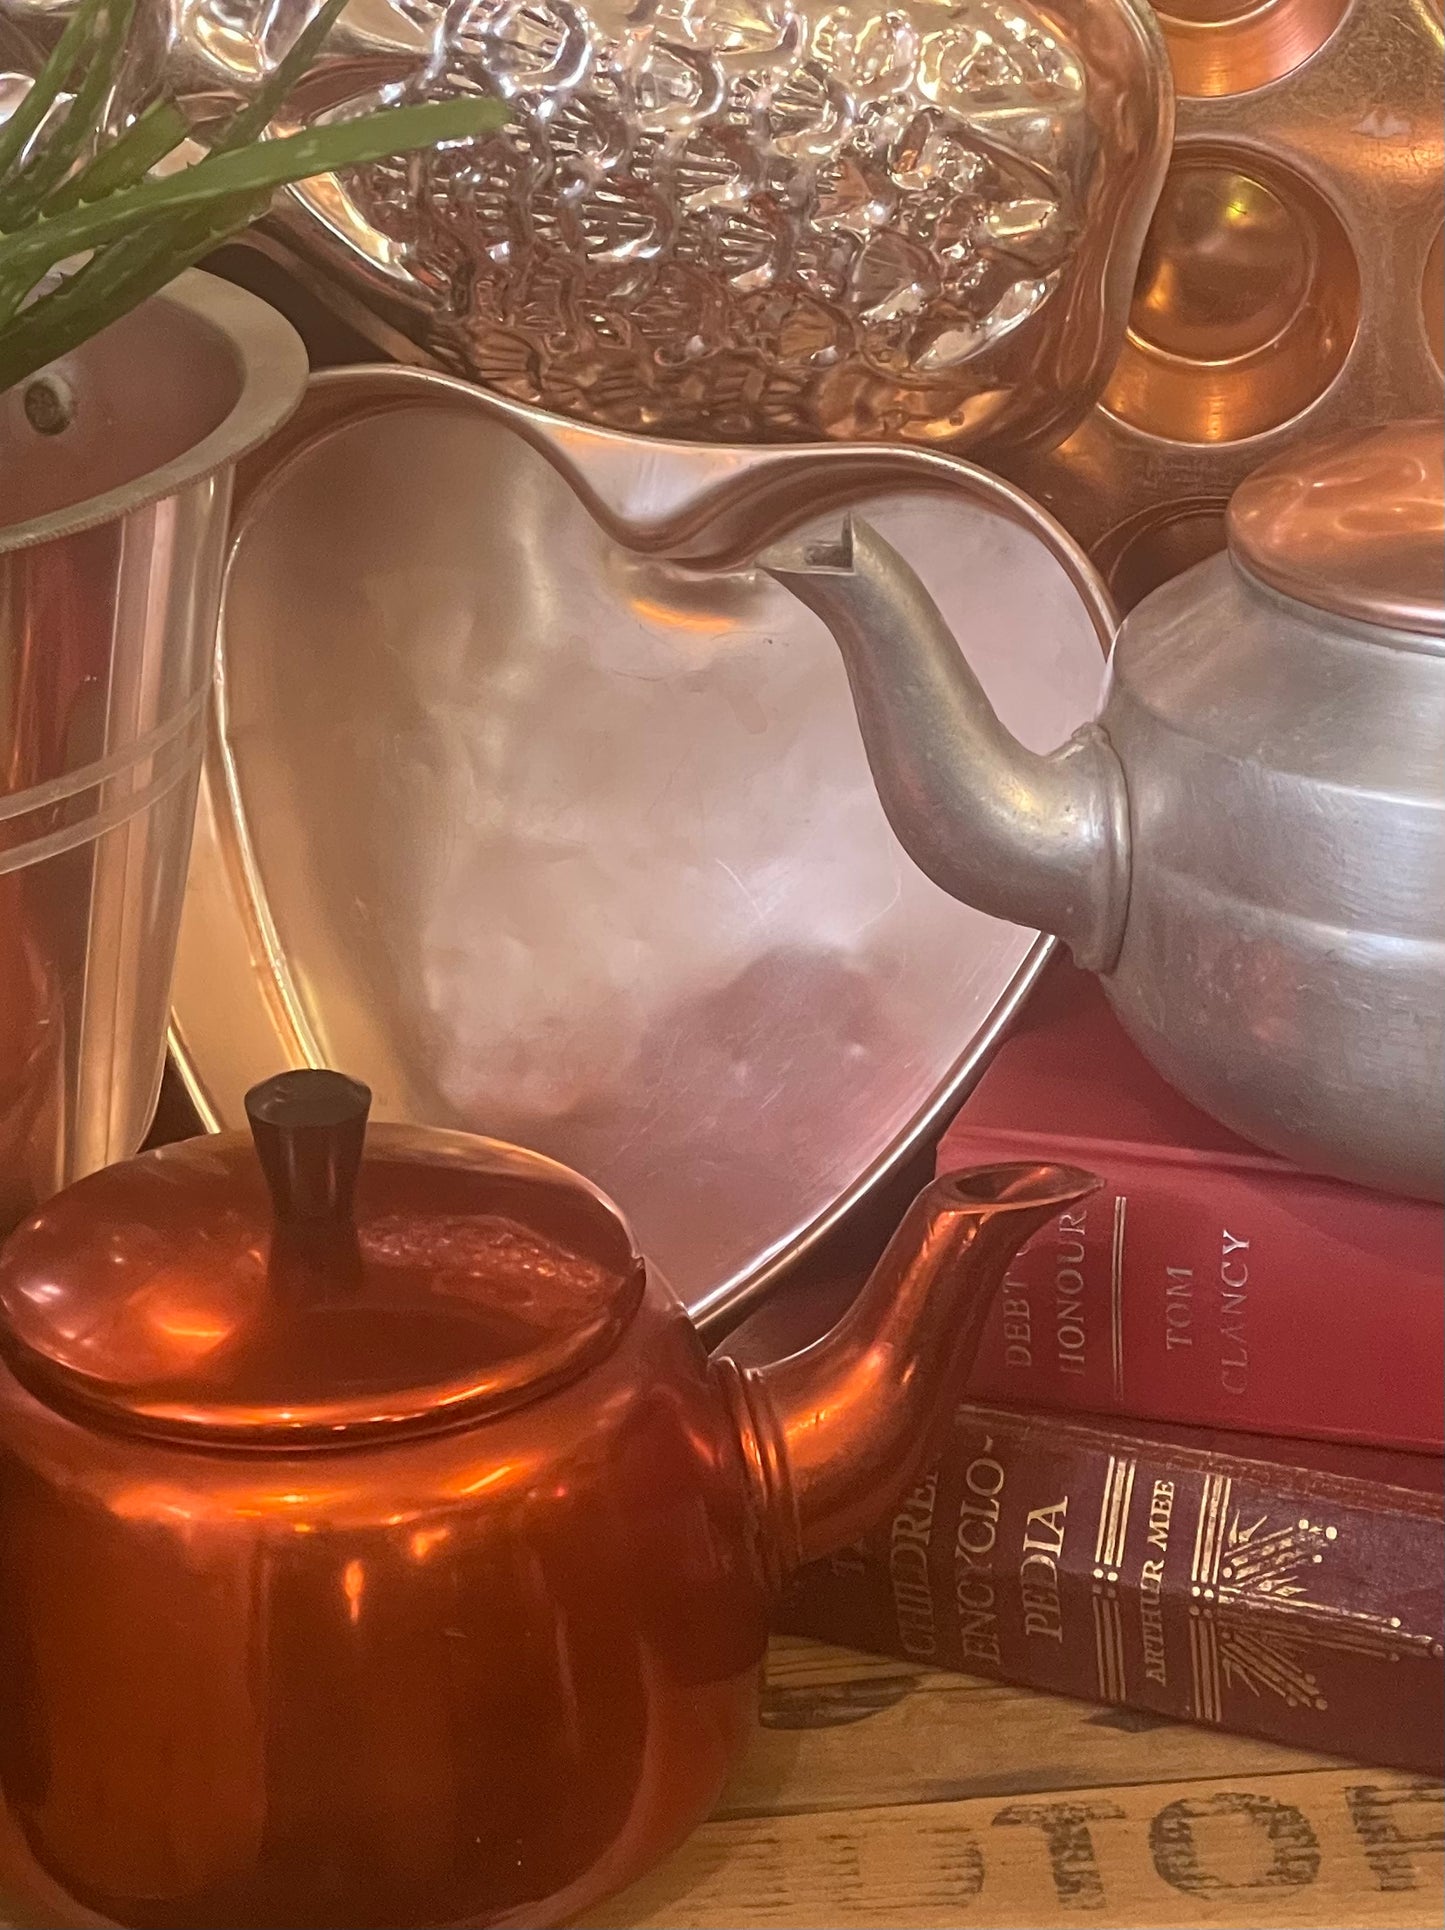 Vintage Aluminium 8 Cup Tea Pot with anodised lid